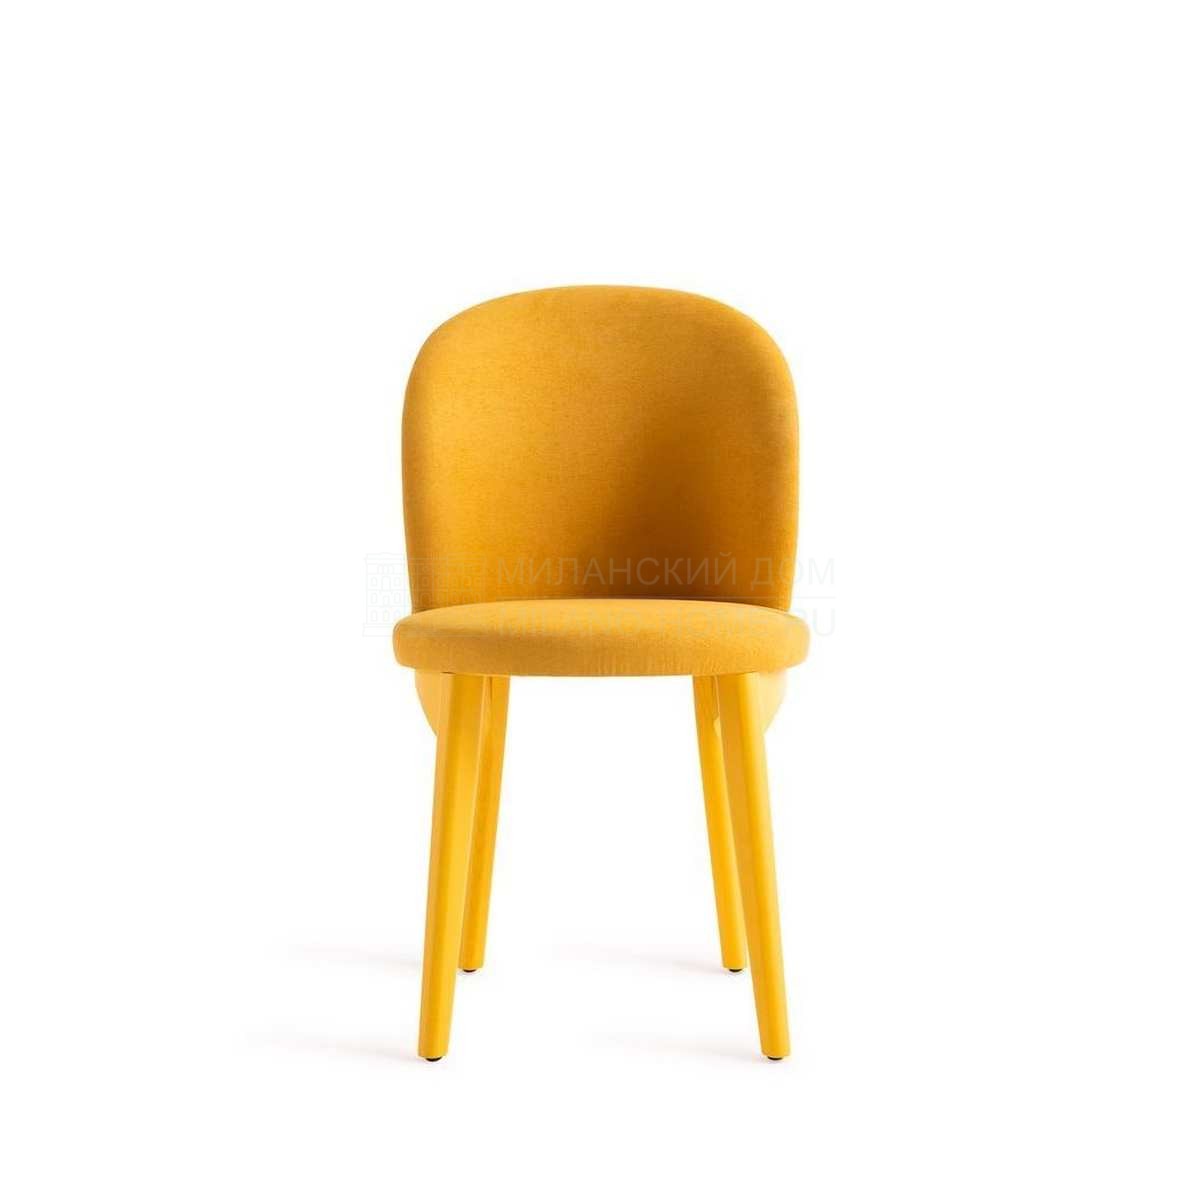 Стул Ottavia chair из Италии фабрики FENDI Casa